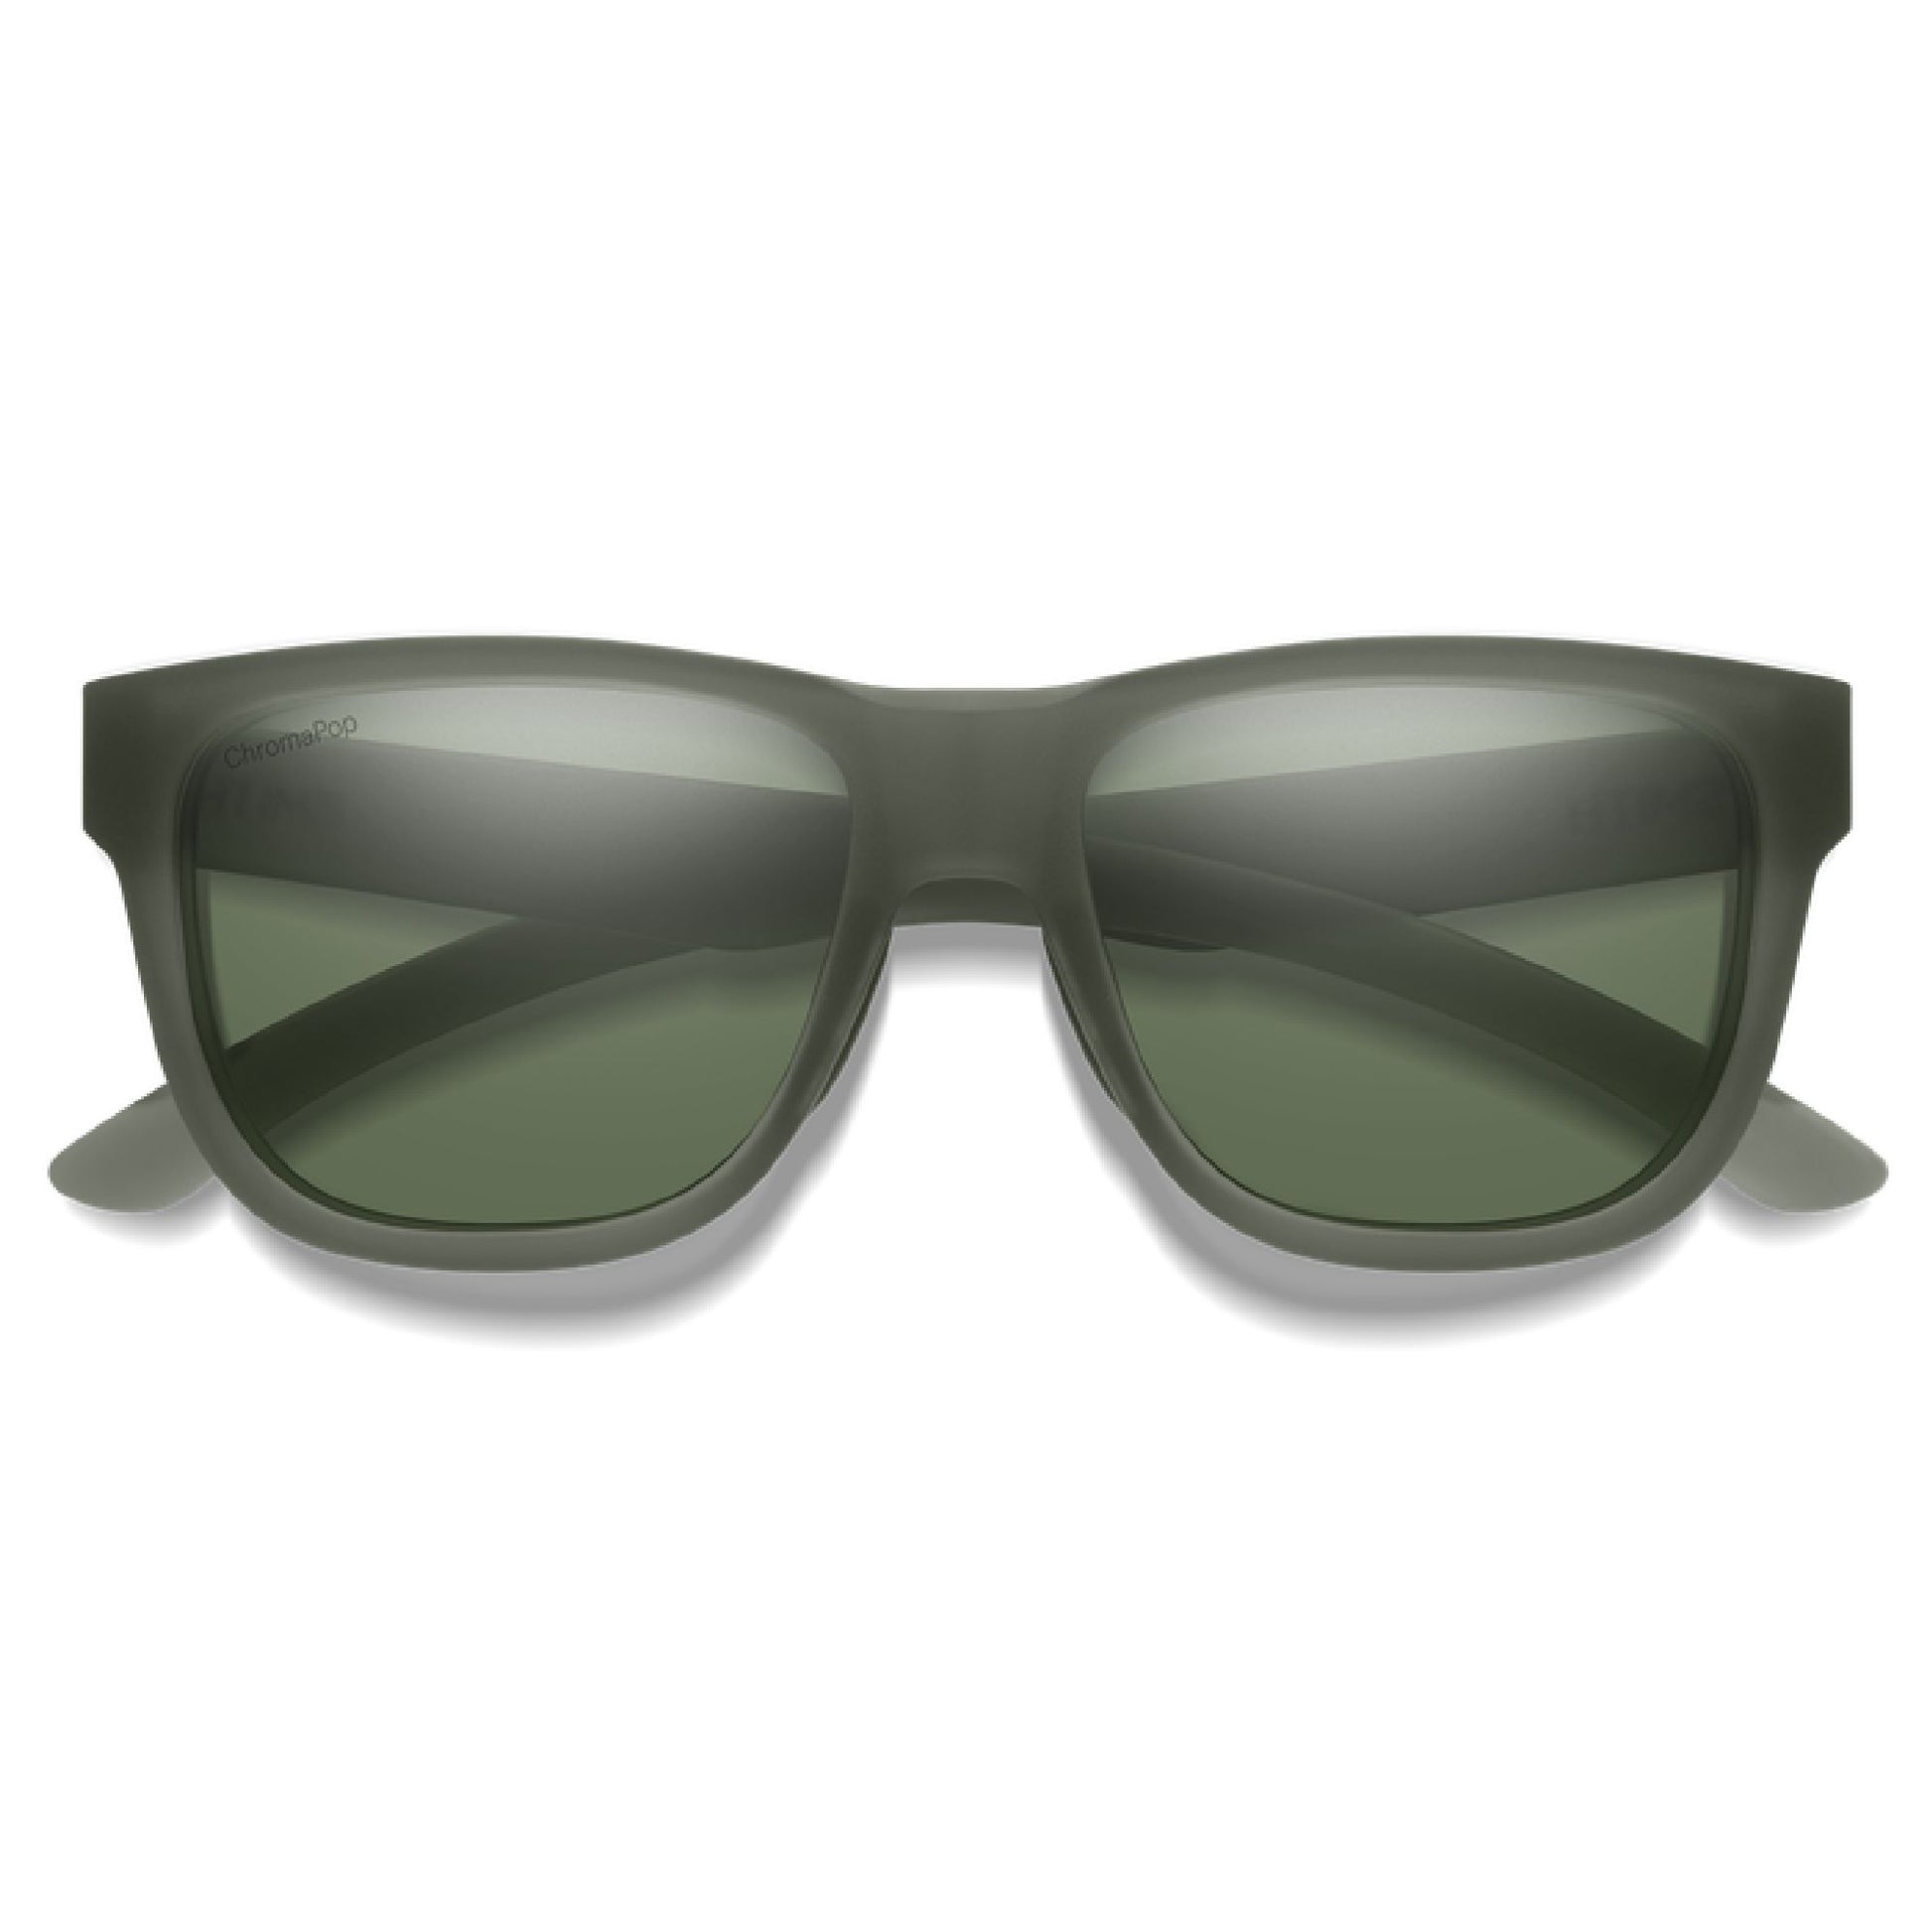 Smith Lowdown Slim 2 Sunglasses Matte Moss Crystal / ChromaPop Polarized Gray Geen Sunglasses